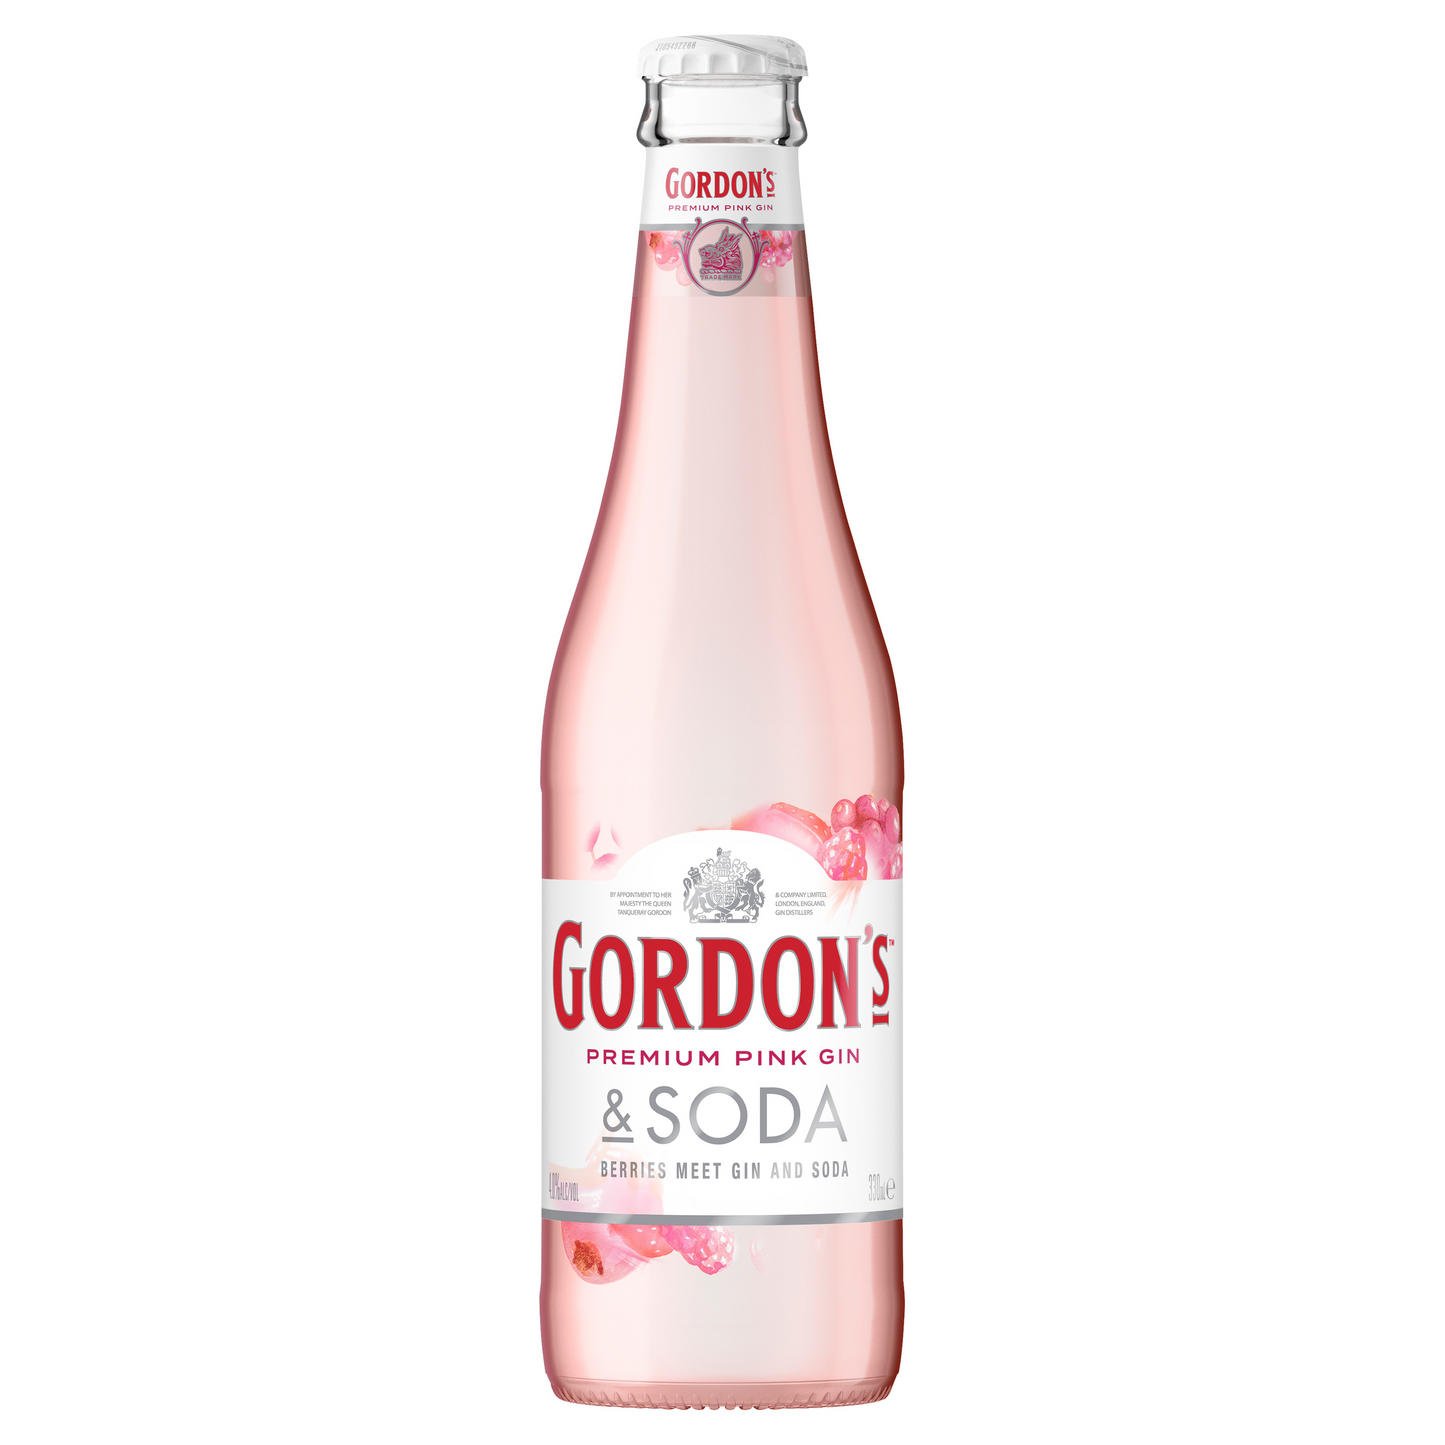 Gordon's Premium Pink Gin & Soda 4x330ml bottles